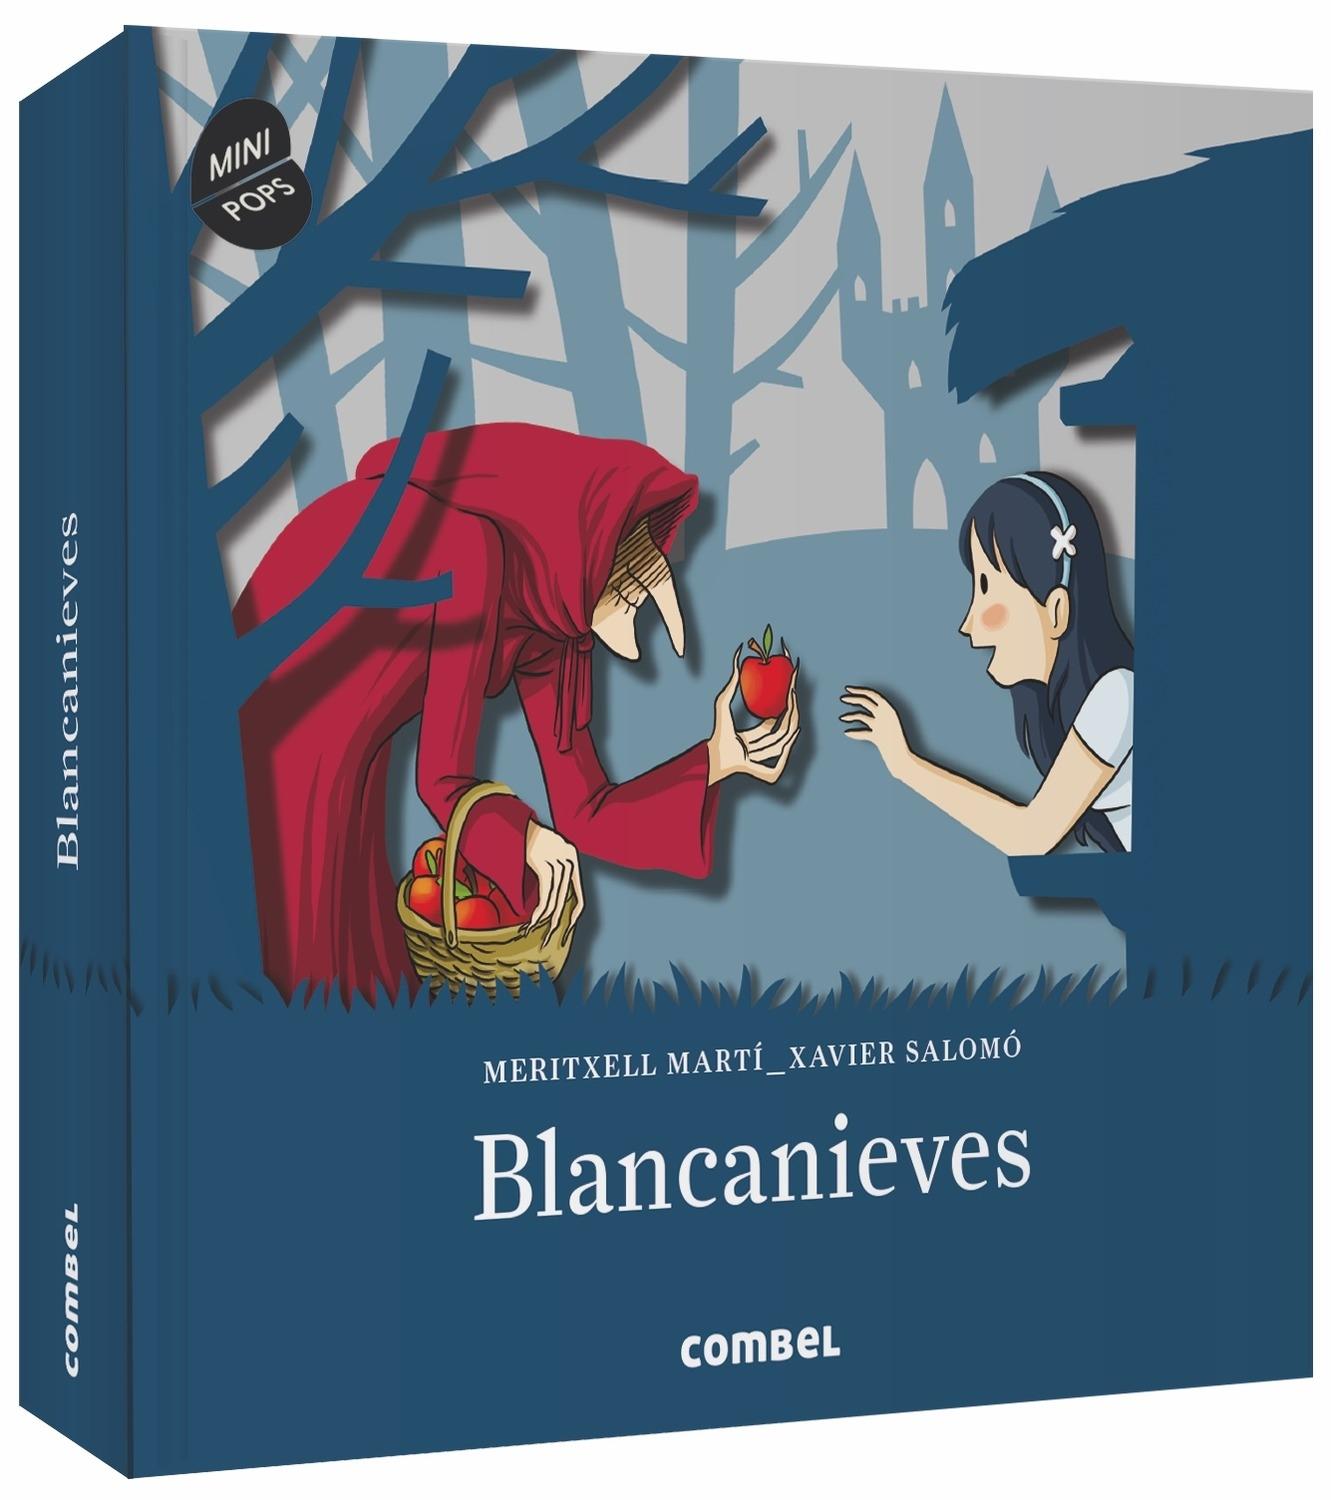 Blancanieves "Mini pops". 